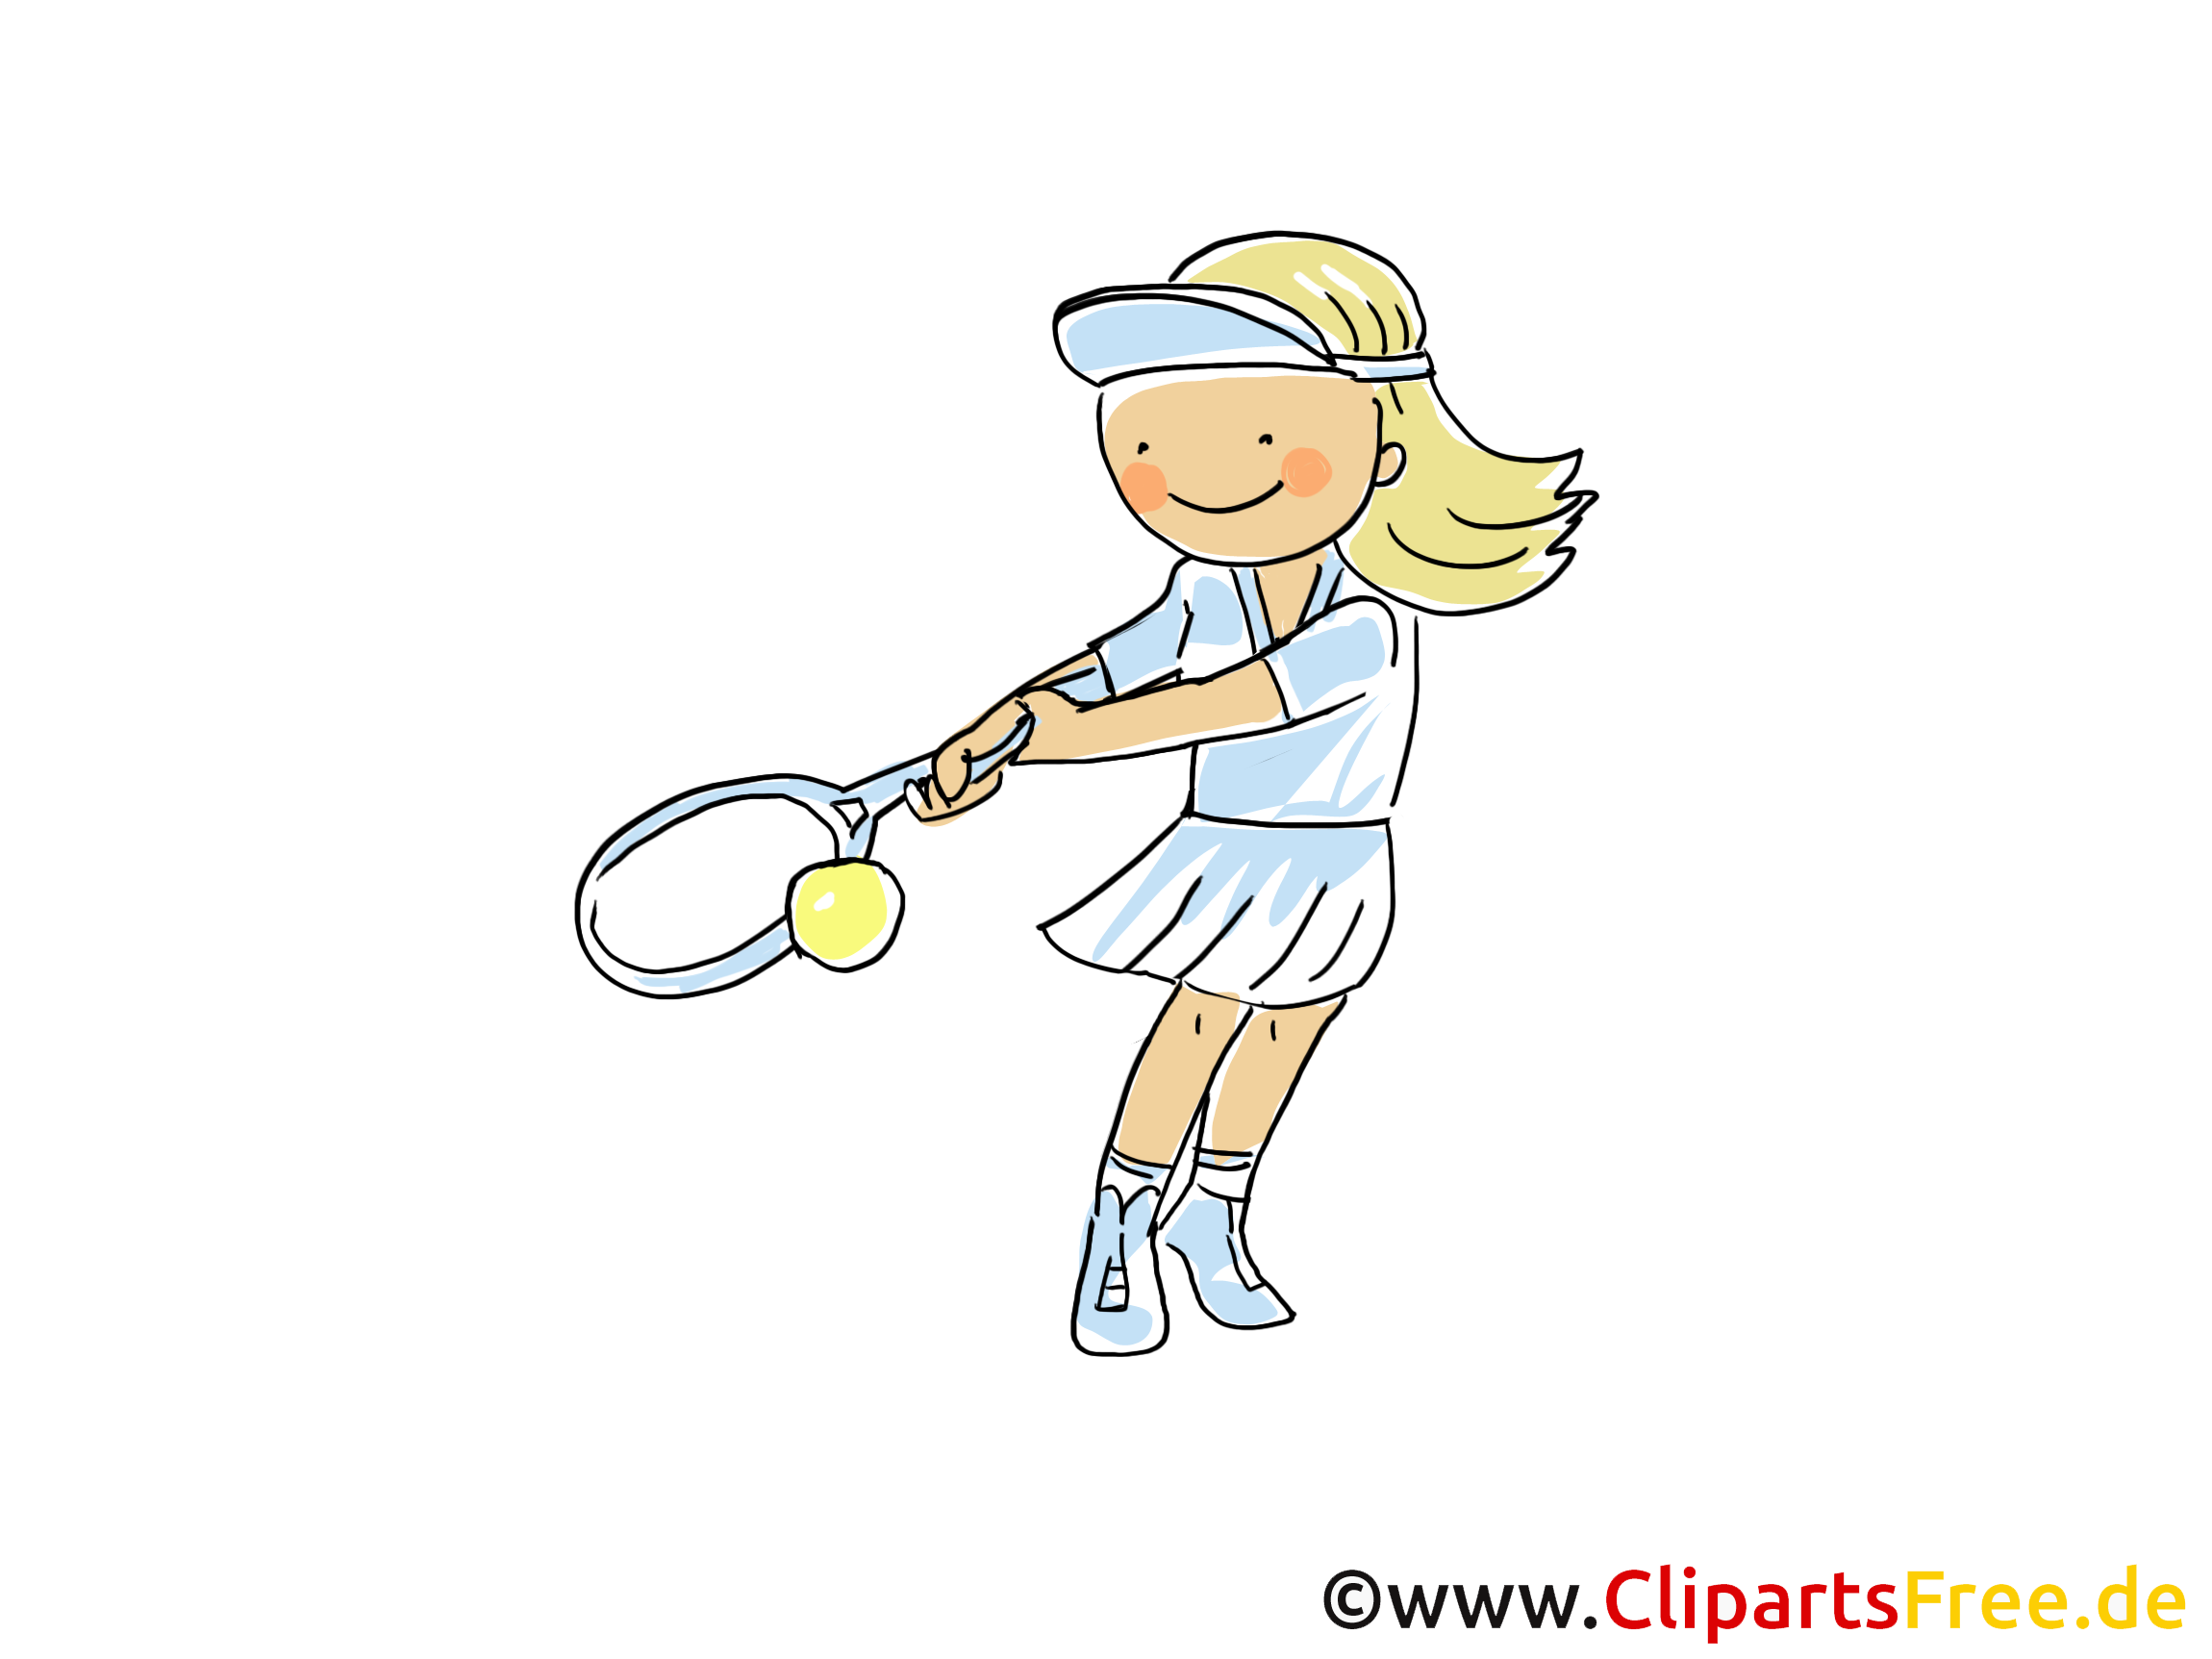 Tennis image - Raquette images cliparts